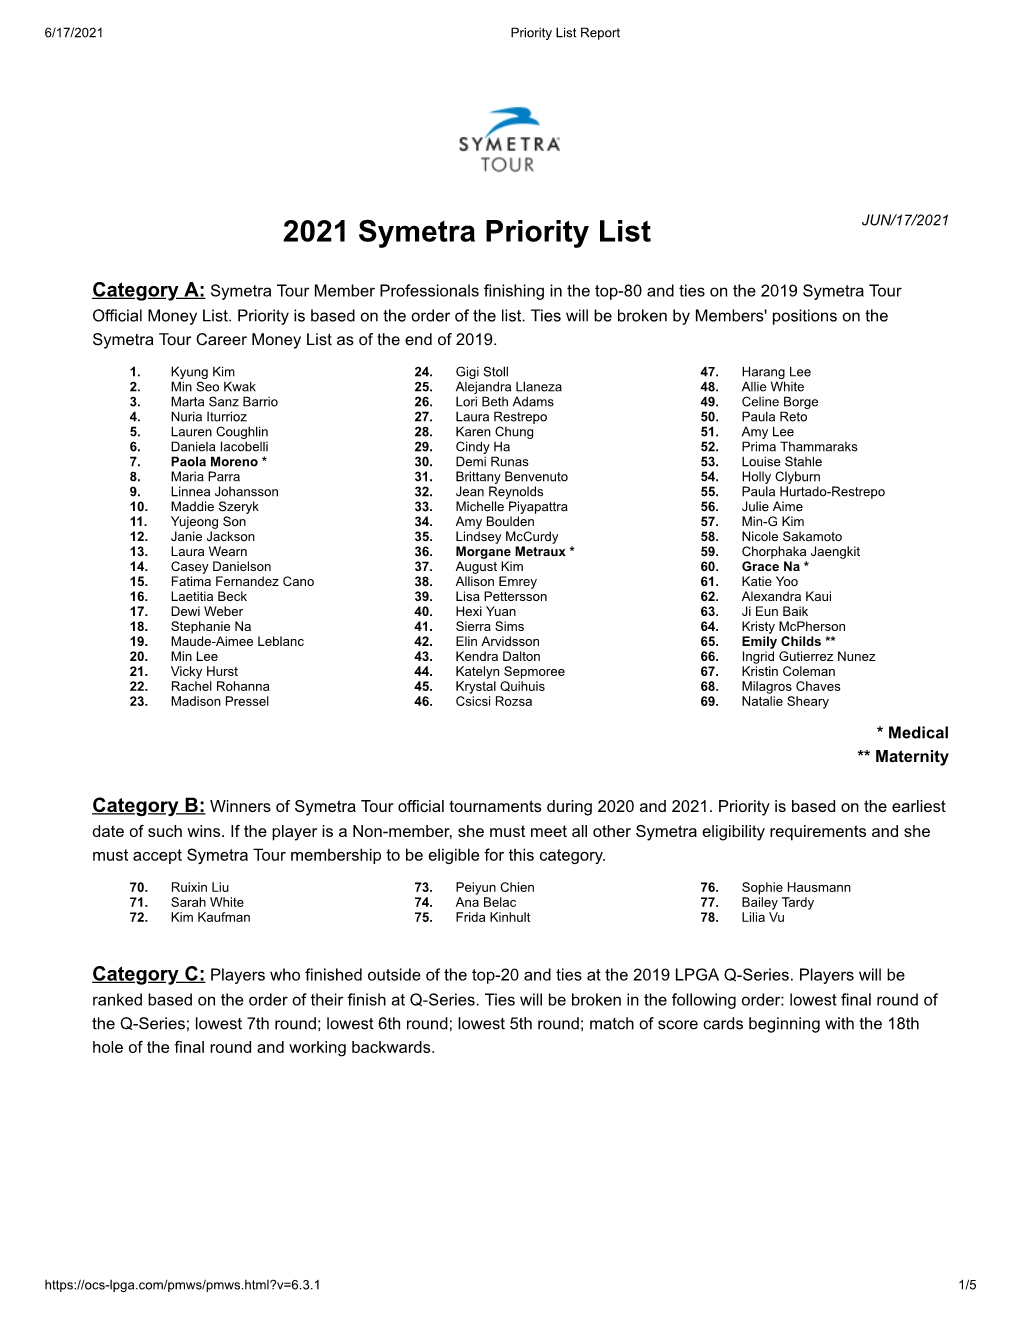 2021 Symetra Tour Priority Listupdate061721